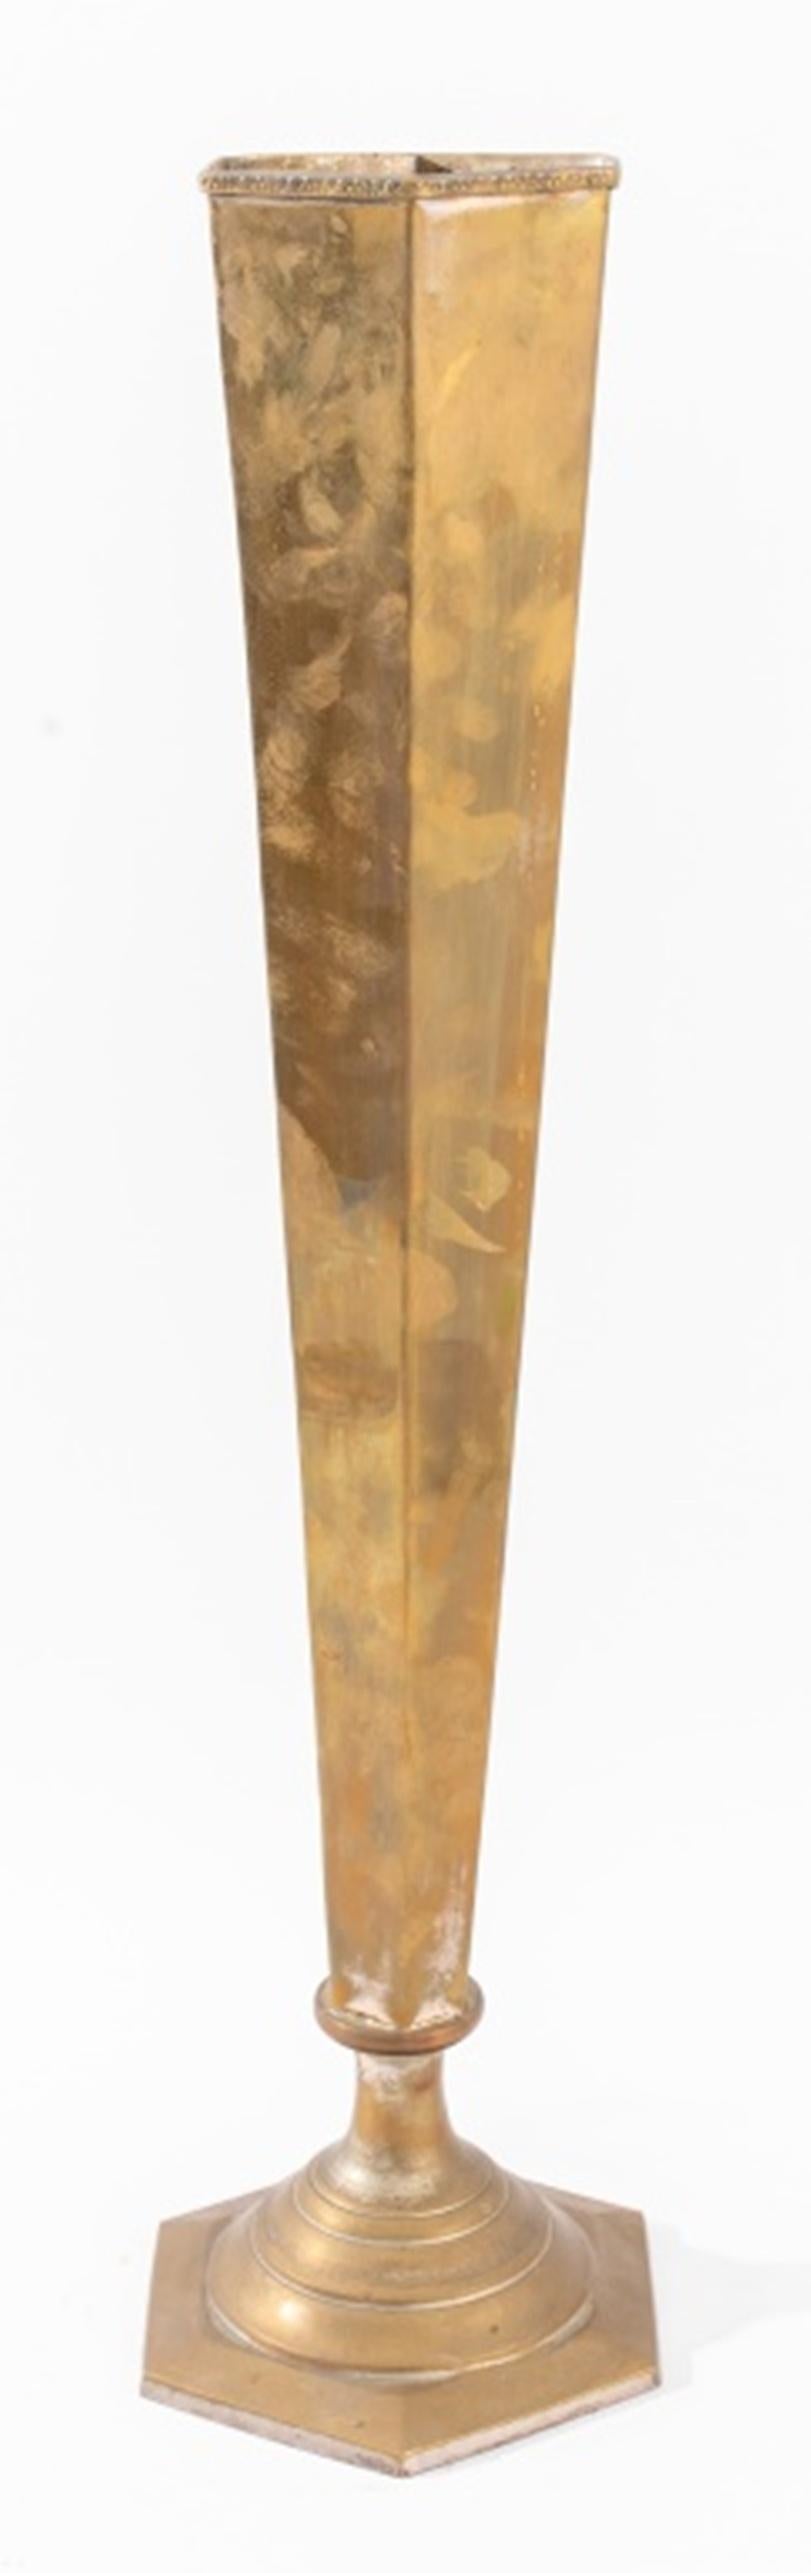 Art Deco Gilt Metal Hexagonal Floor Vase In Good Condition For Sale In New York, NY